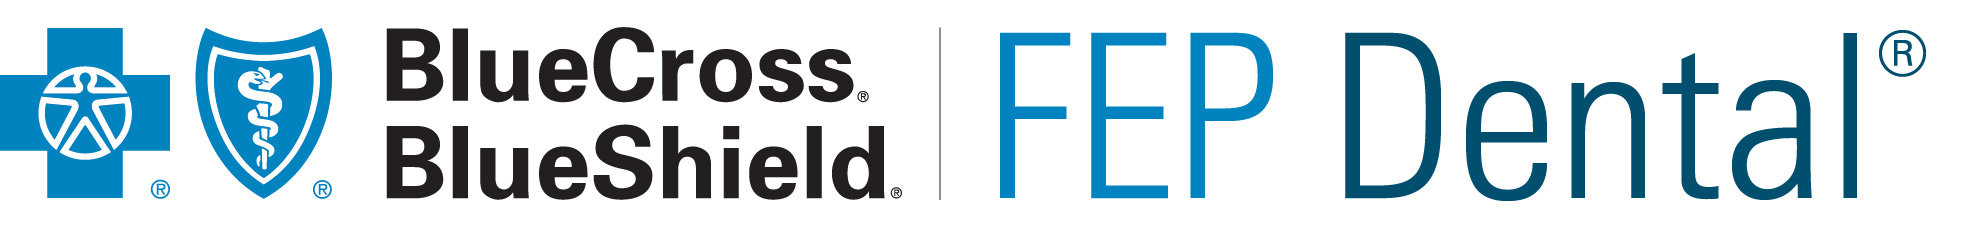 BCBS and FEP Dental logos